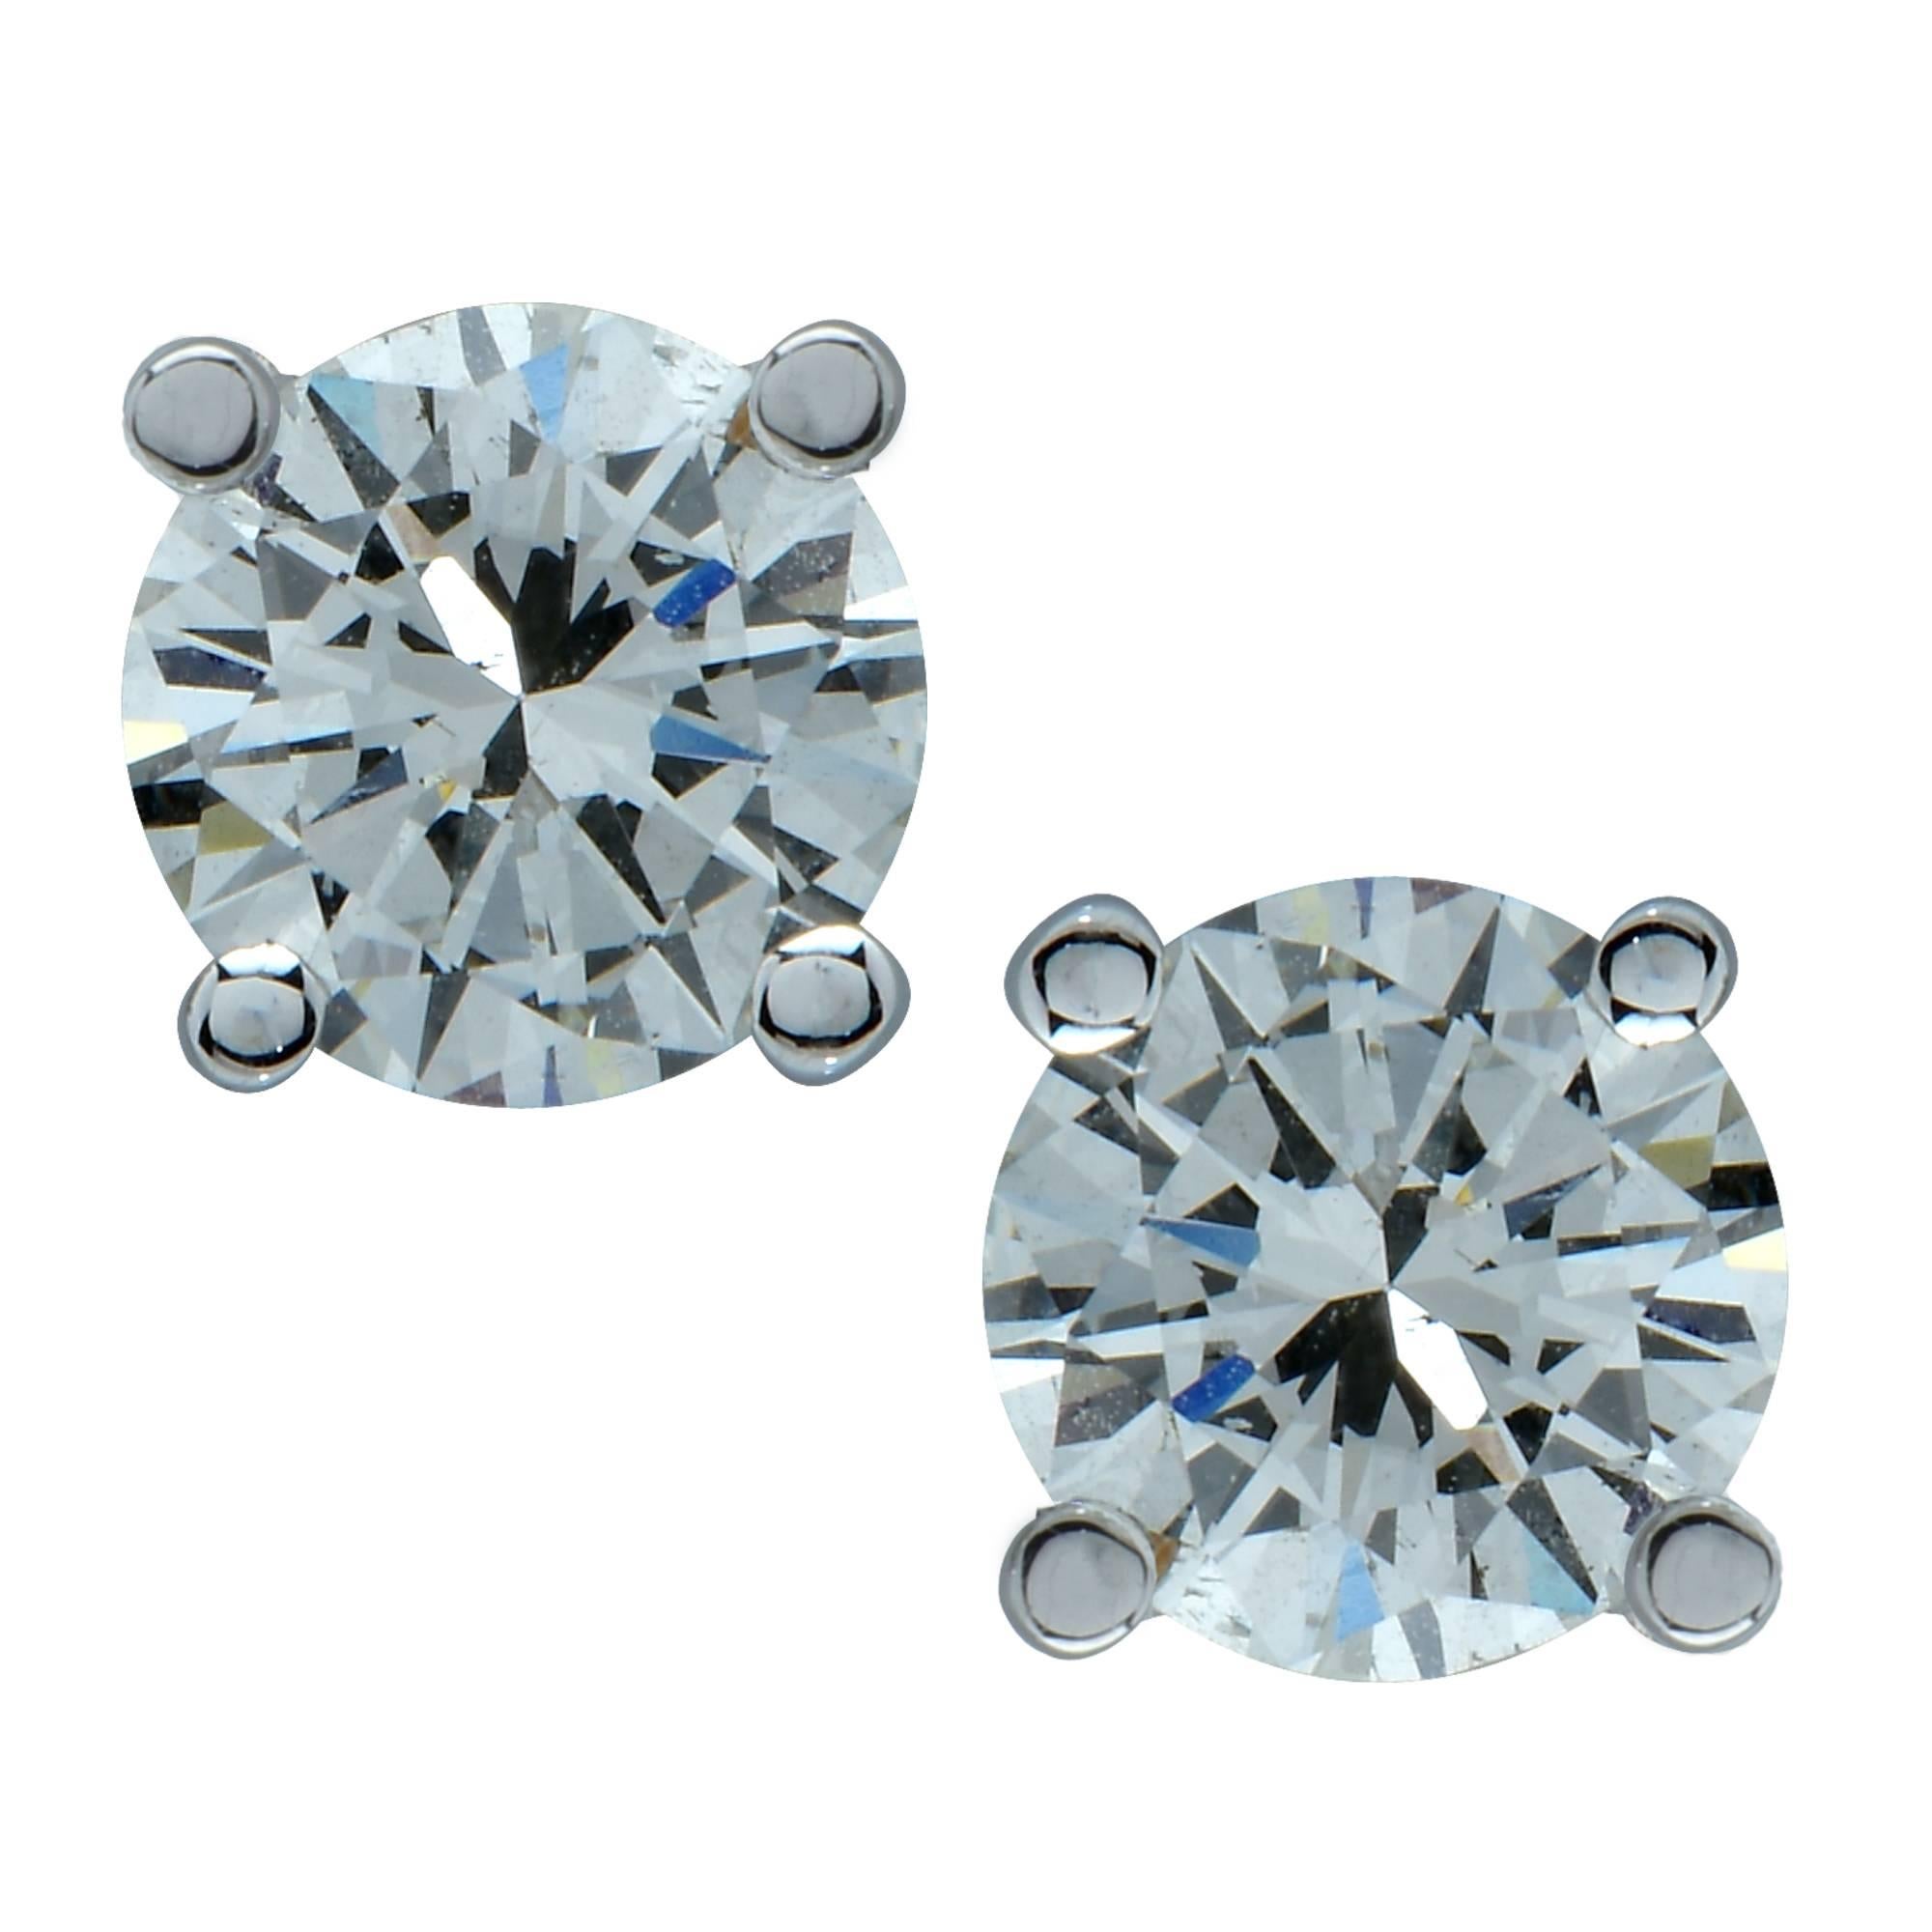 Vivid Diamonds 2.14 Carat Round Brilliant Cut Diamond Stud Earrings